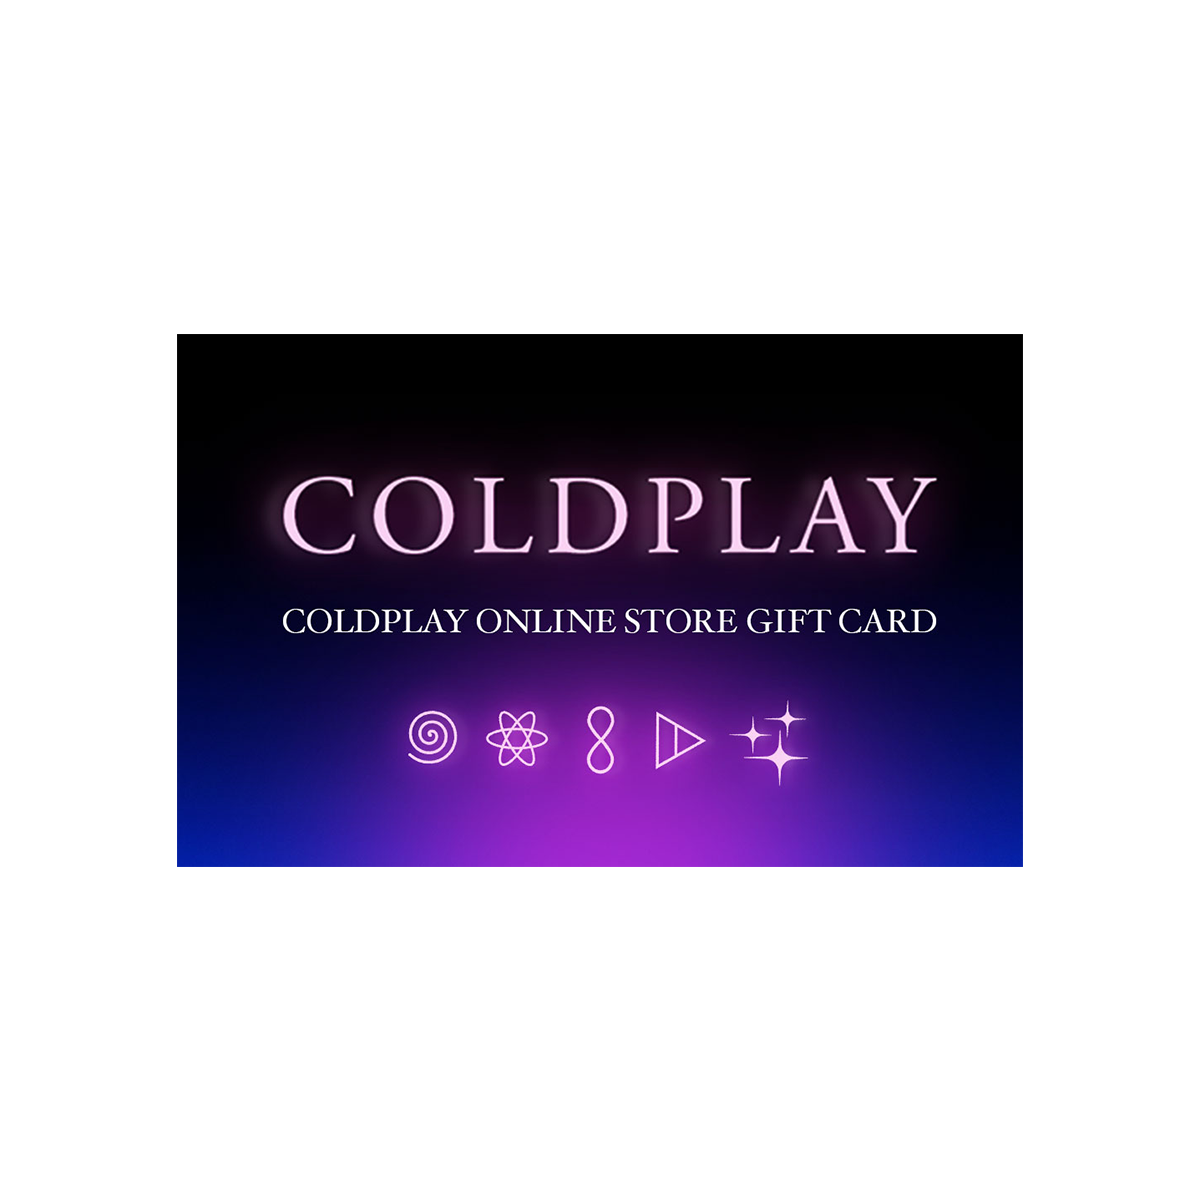 Coldplay EU Gift Card